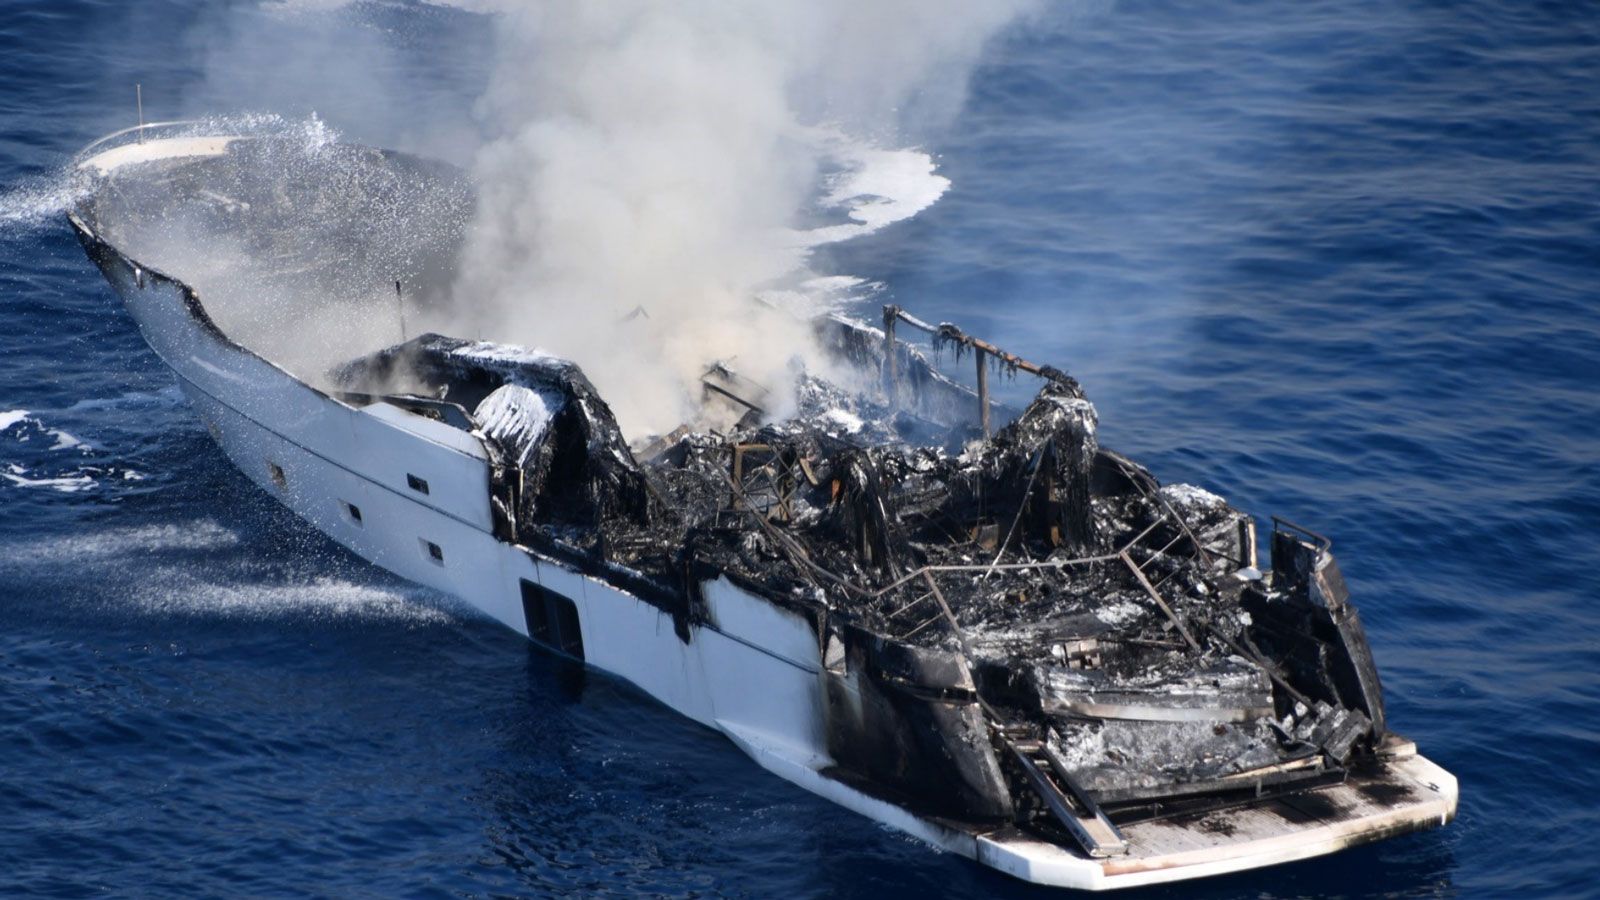 ferretti yacht fire